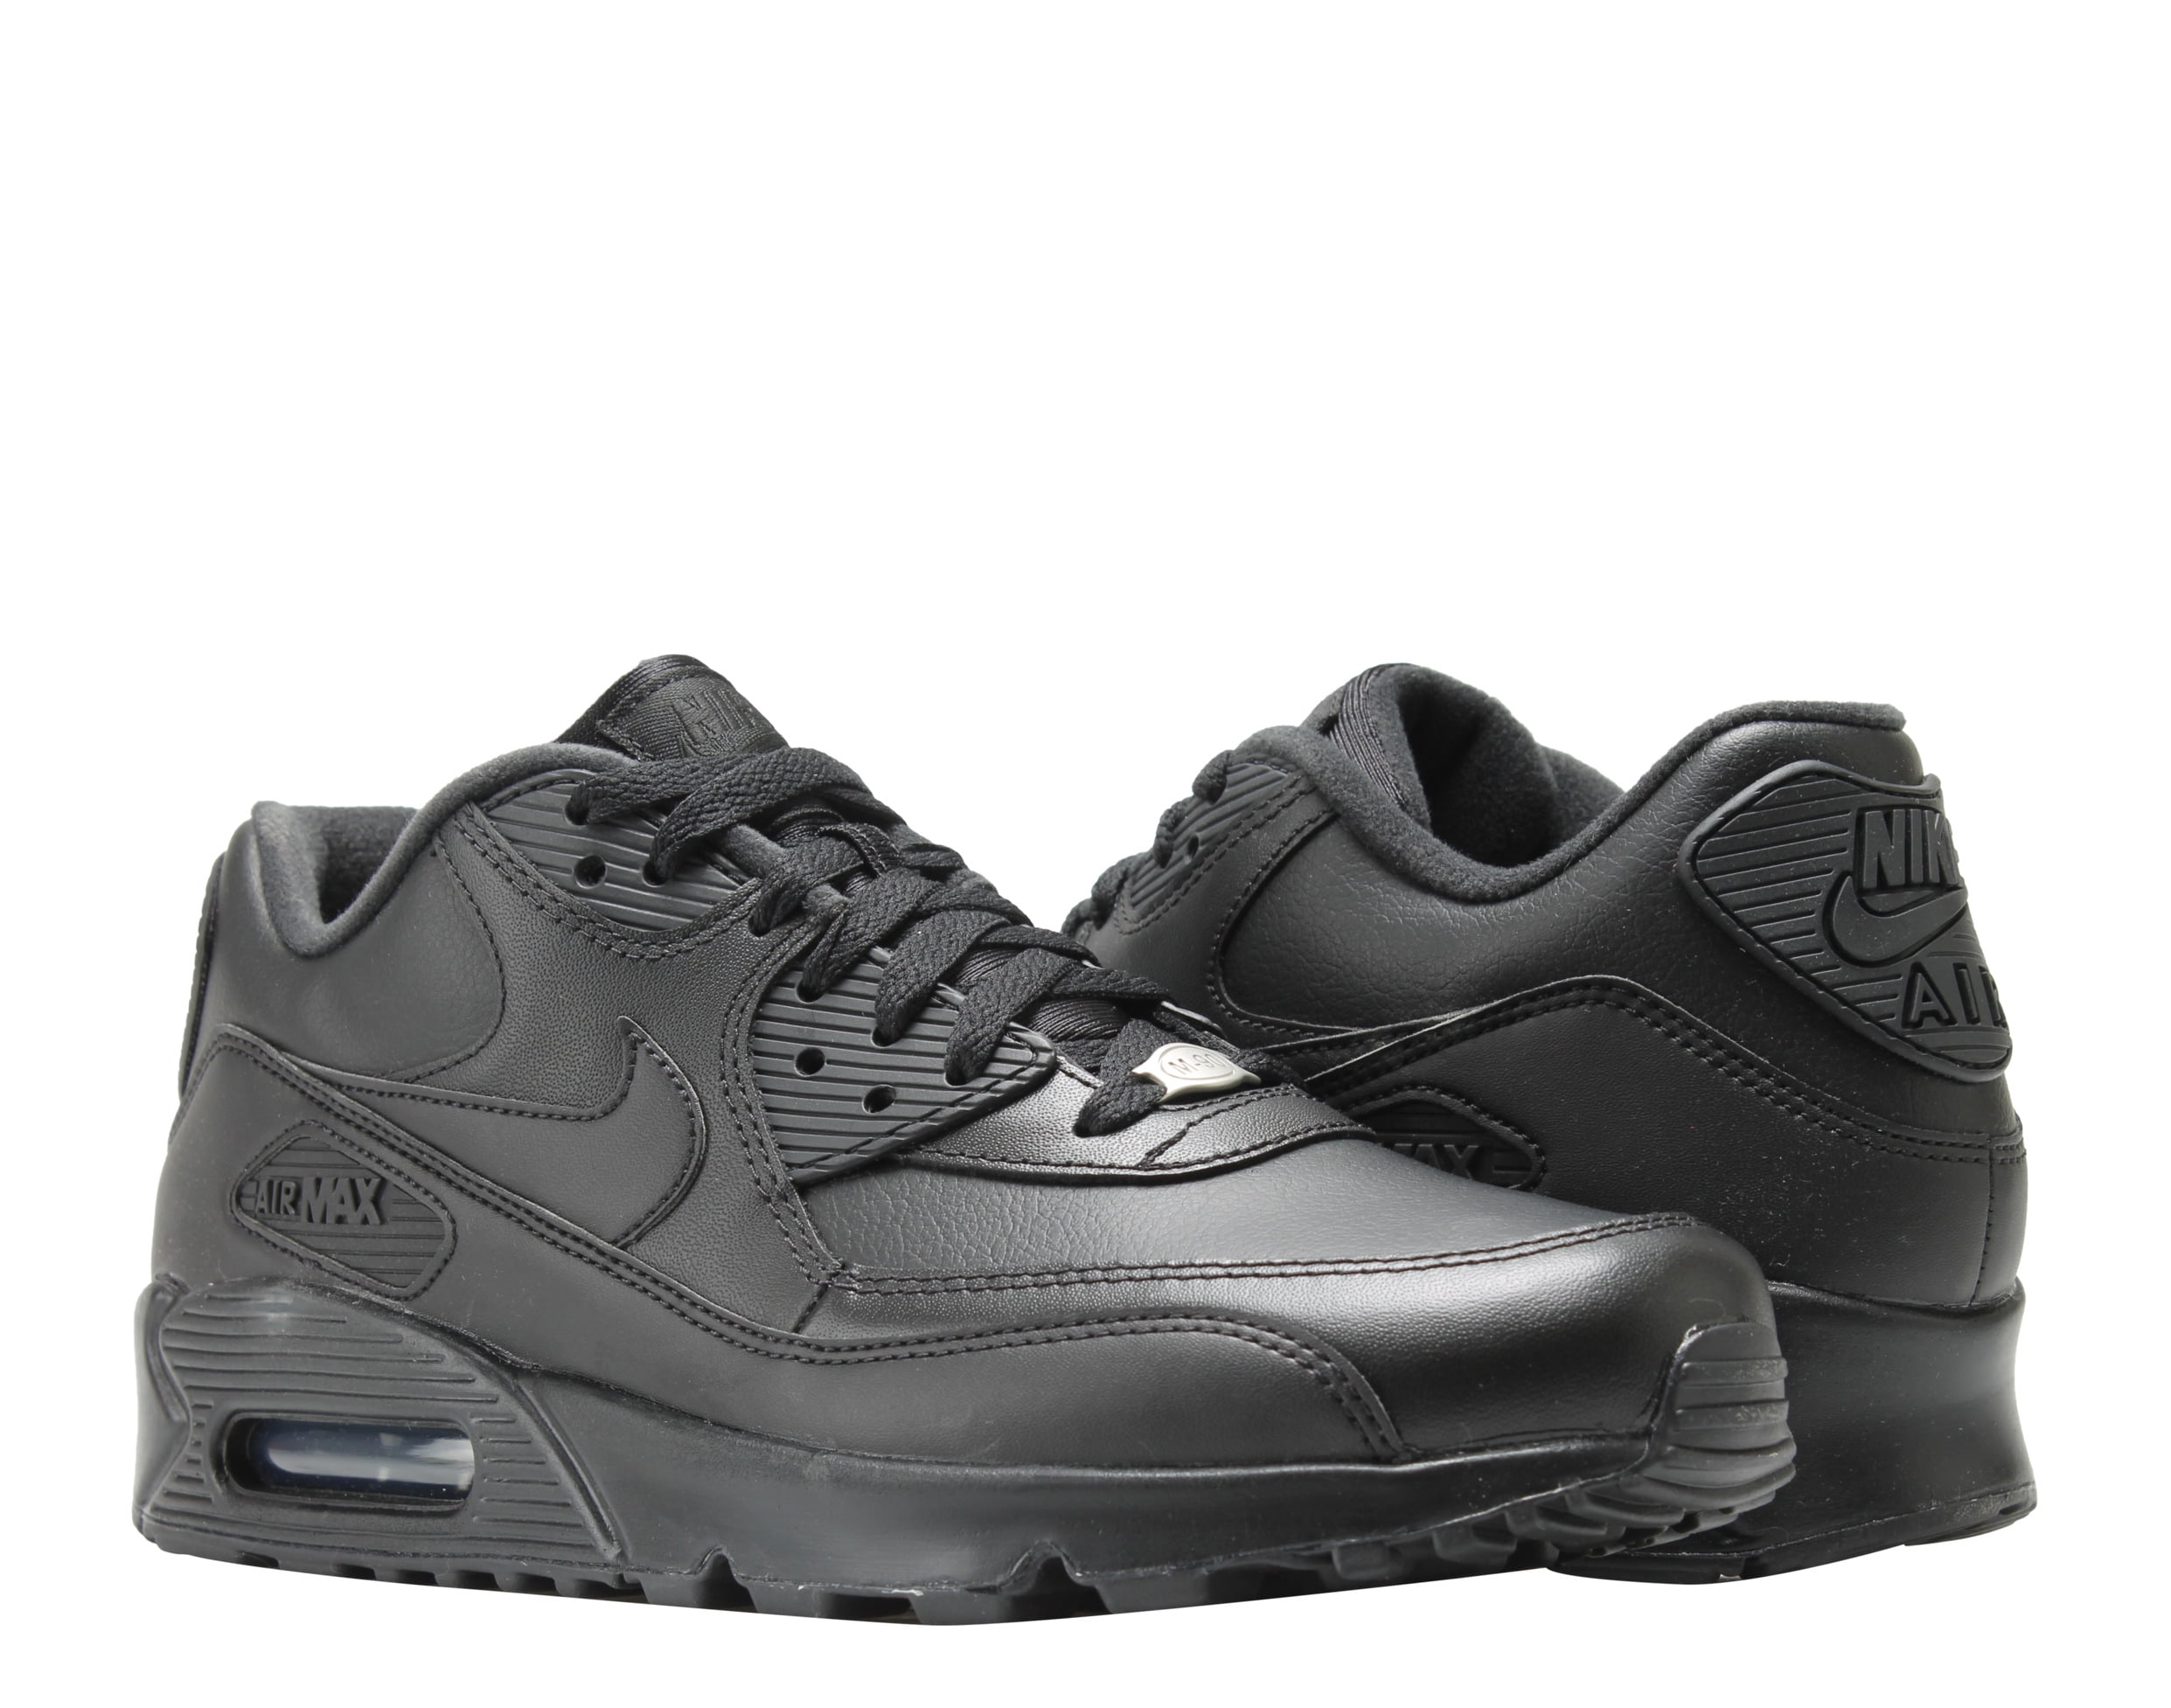 aantrekken Verhuizer gokken Nike Mens Air Max 90 Leather Running Shoes Black/Black 302519-001 Size 10 -  Walmart.com